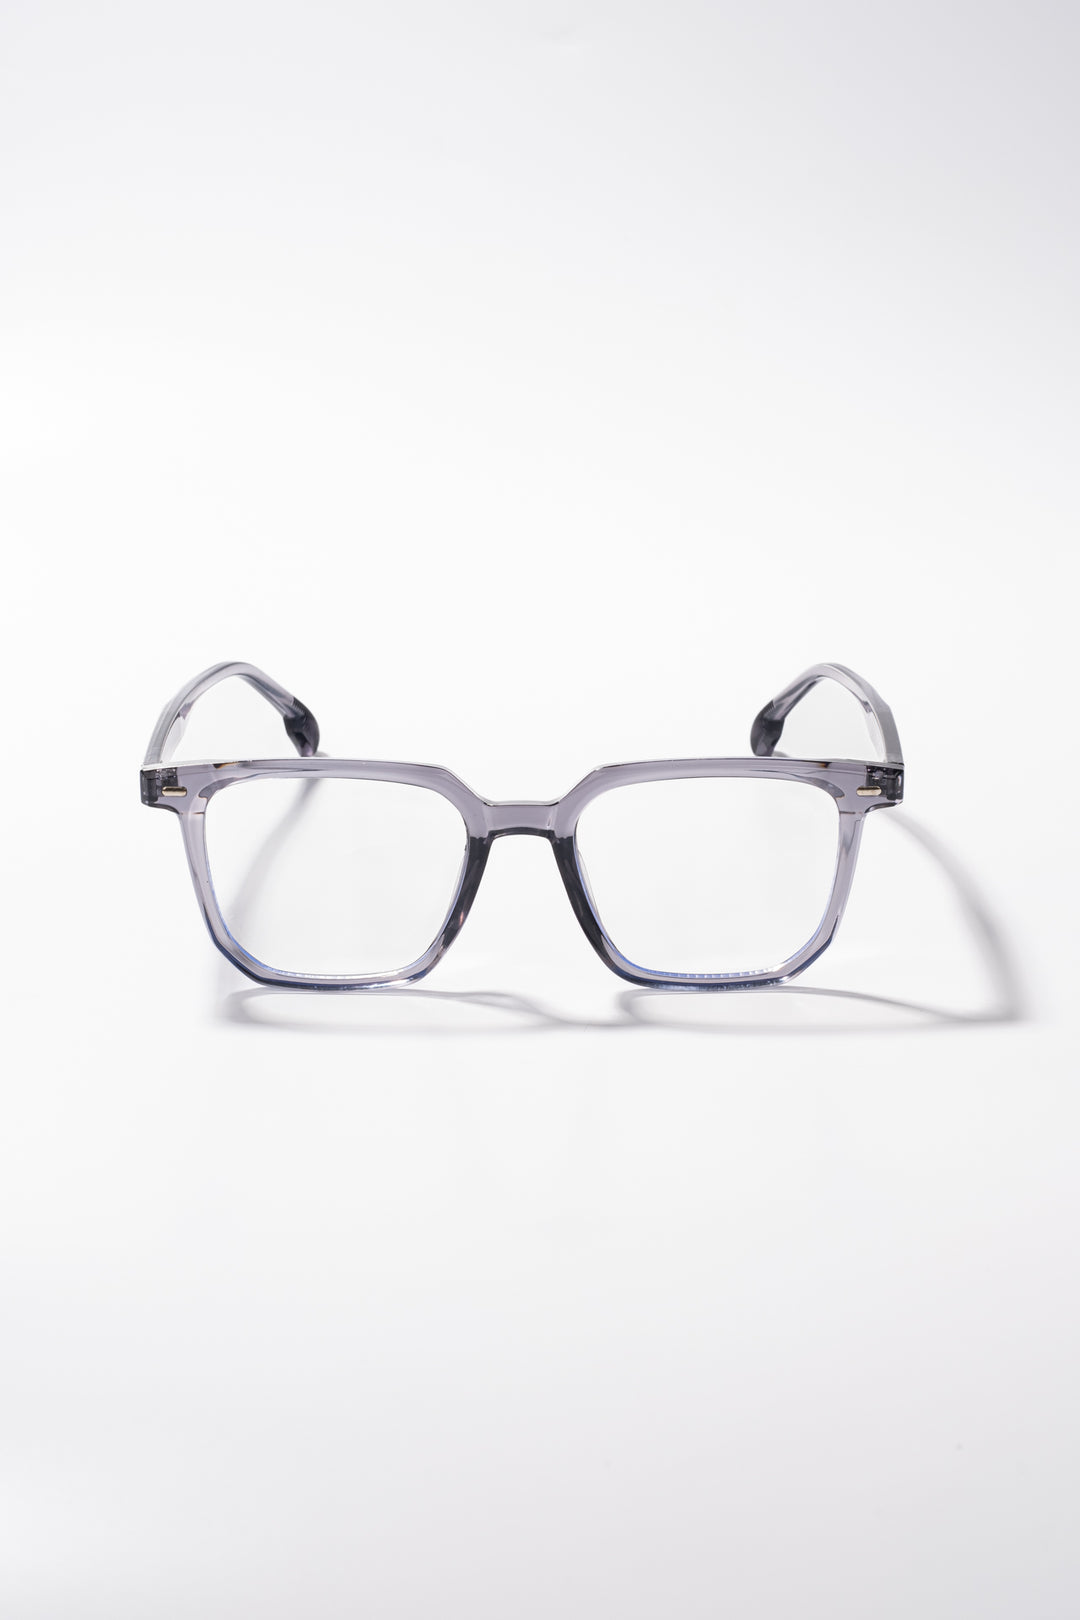 Bred Blue Light Protection Glasses